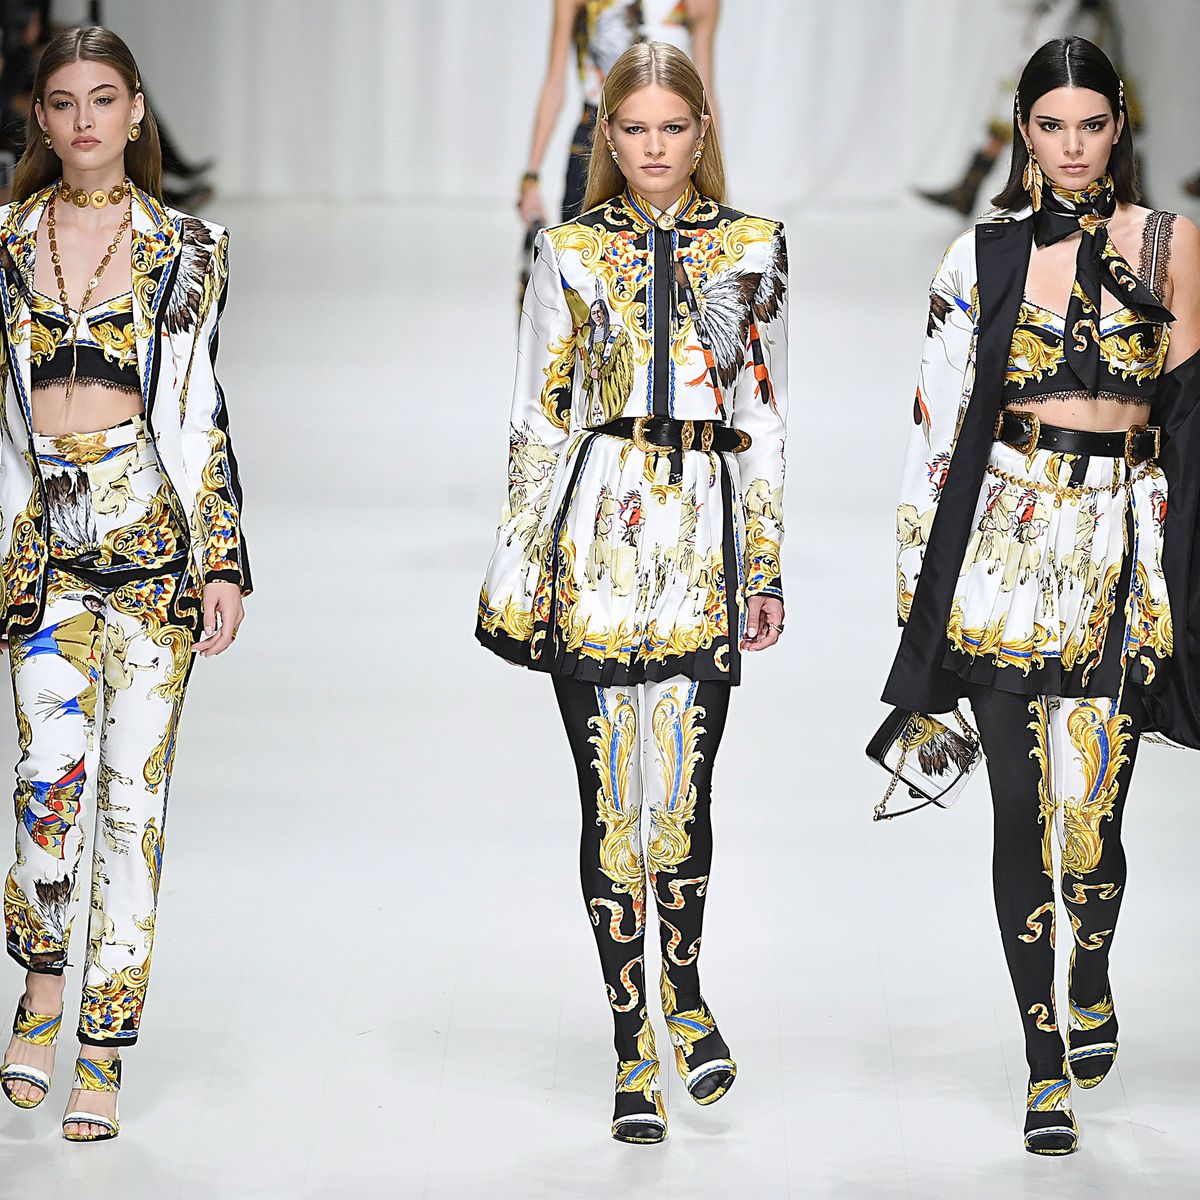 Donatella Versace Says Versace Will Stop Using Fur in Designs